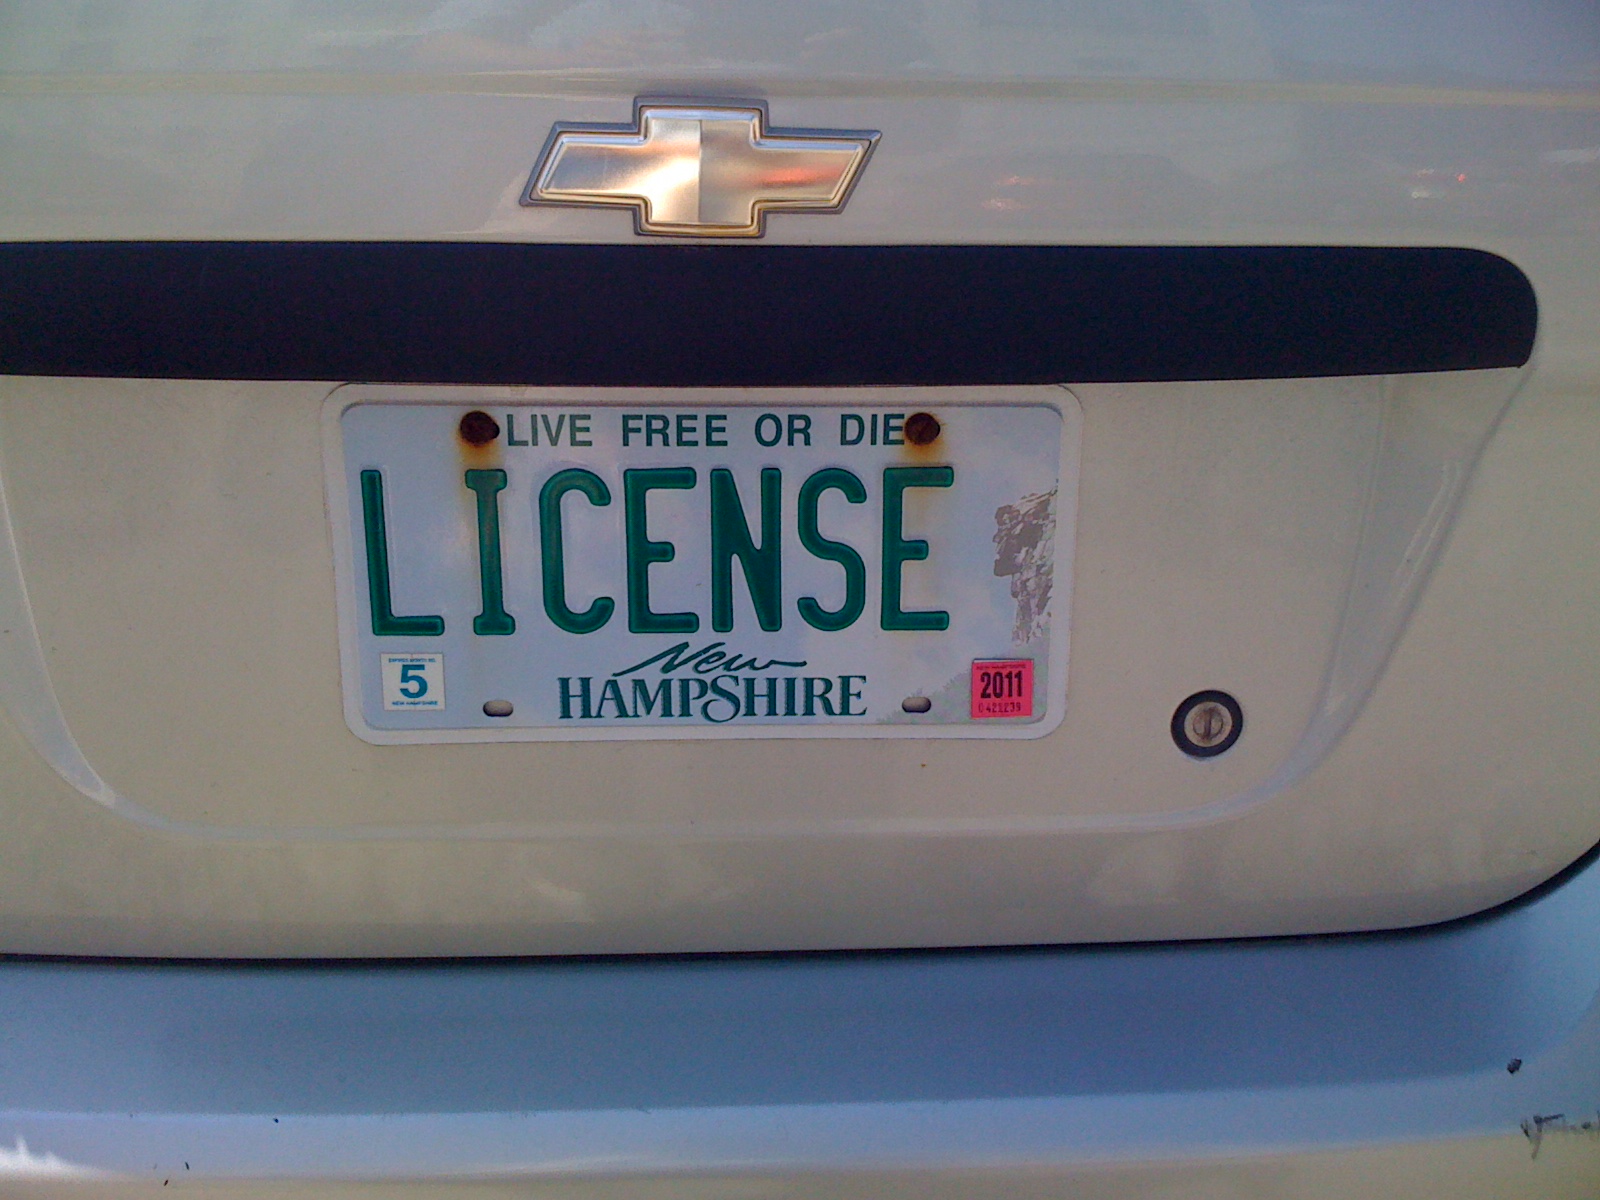 License?